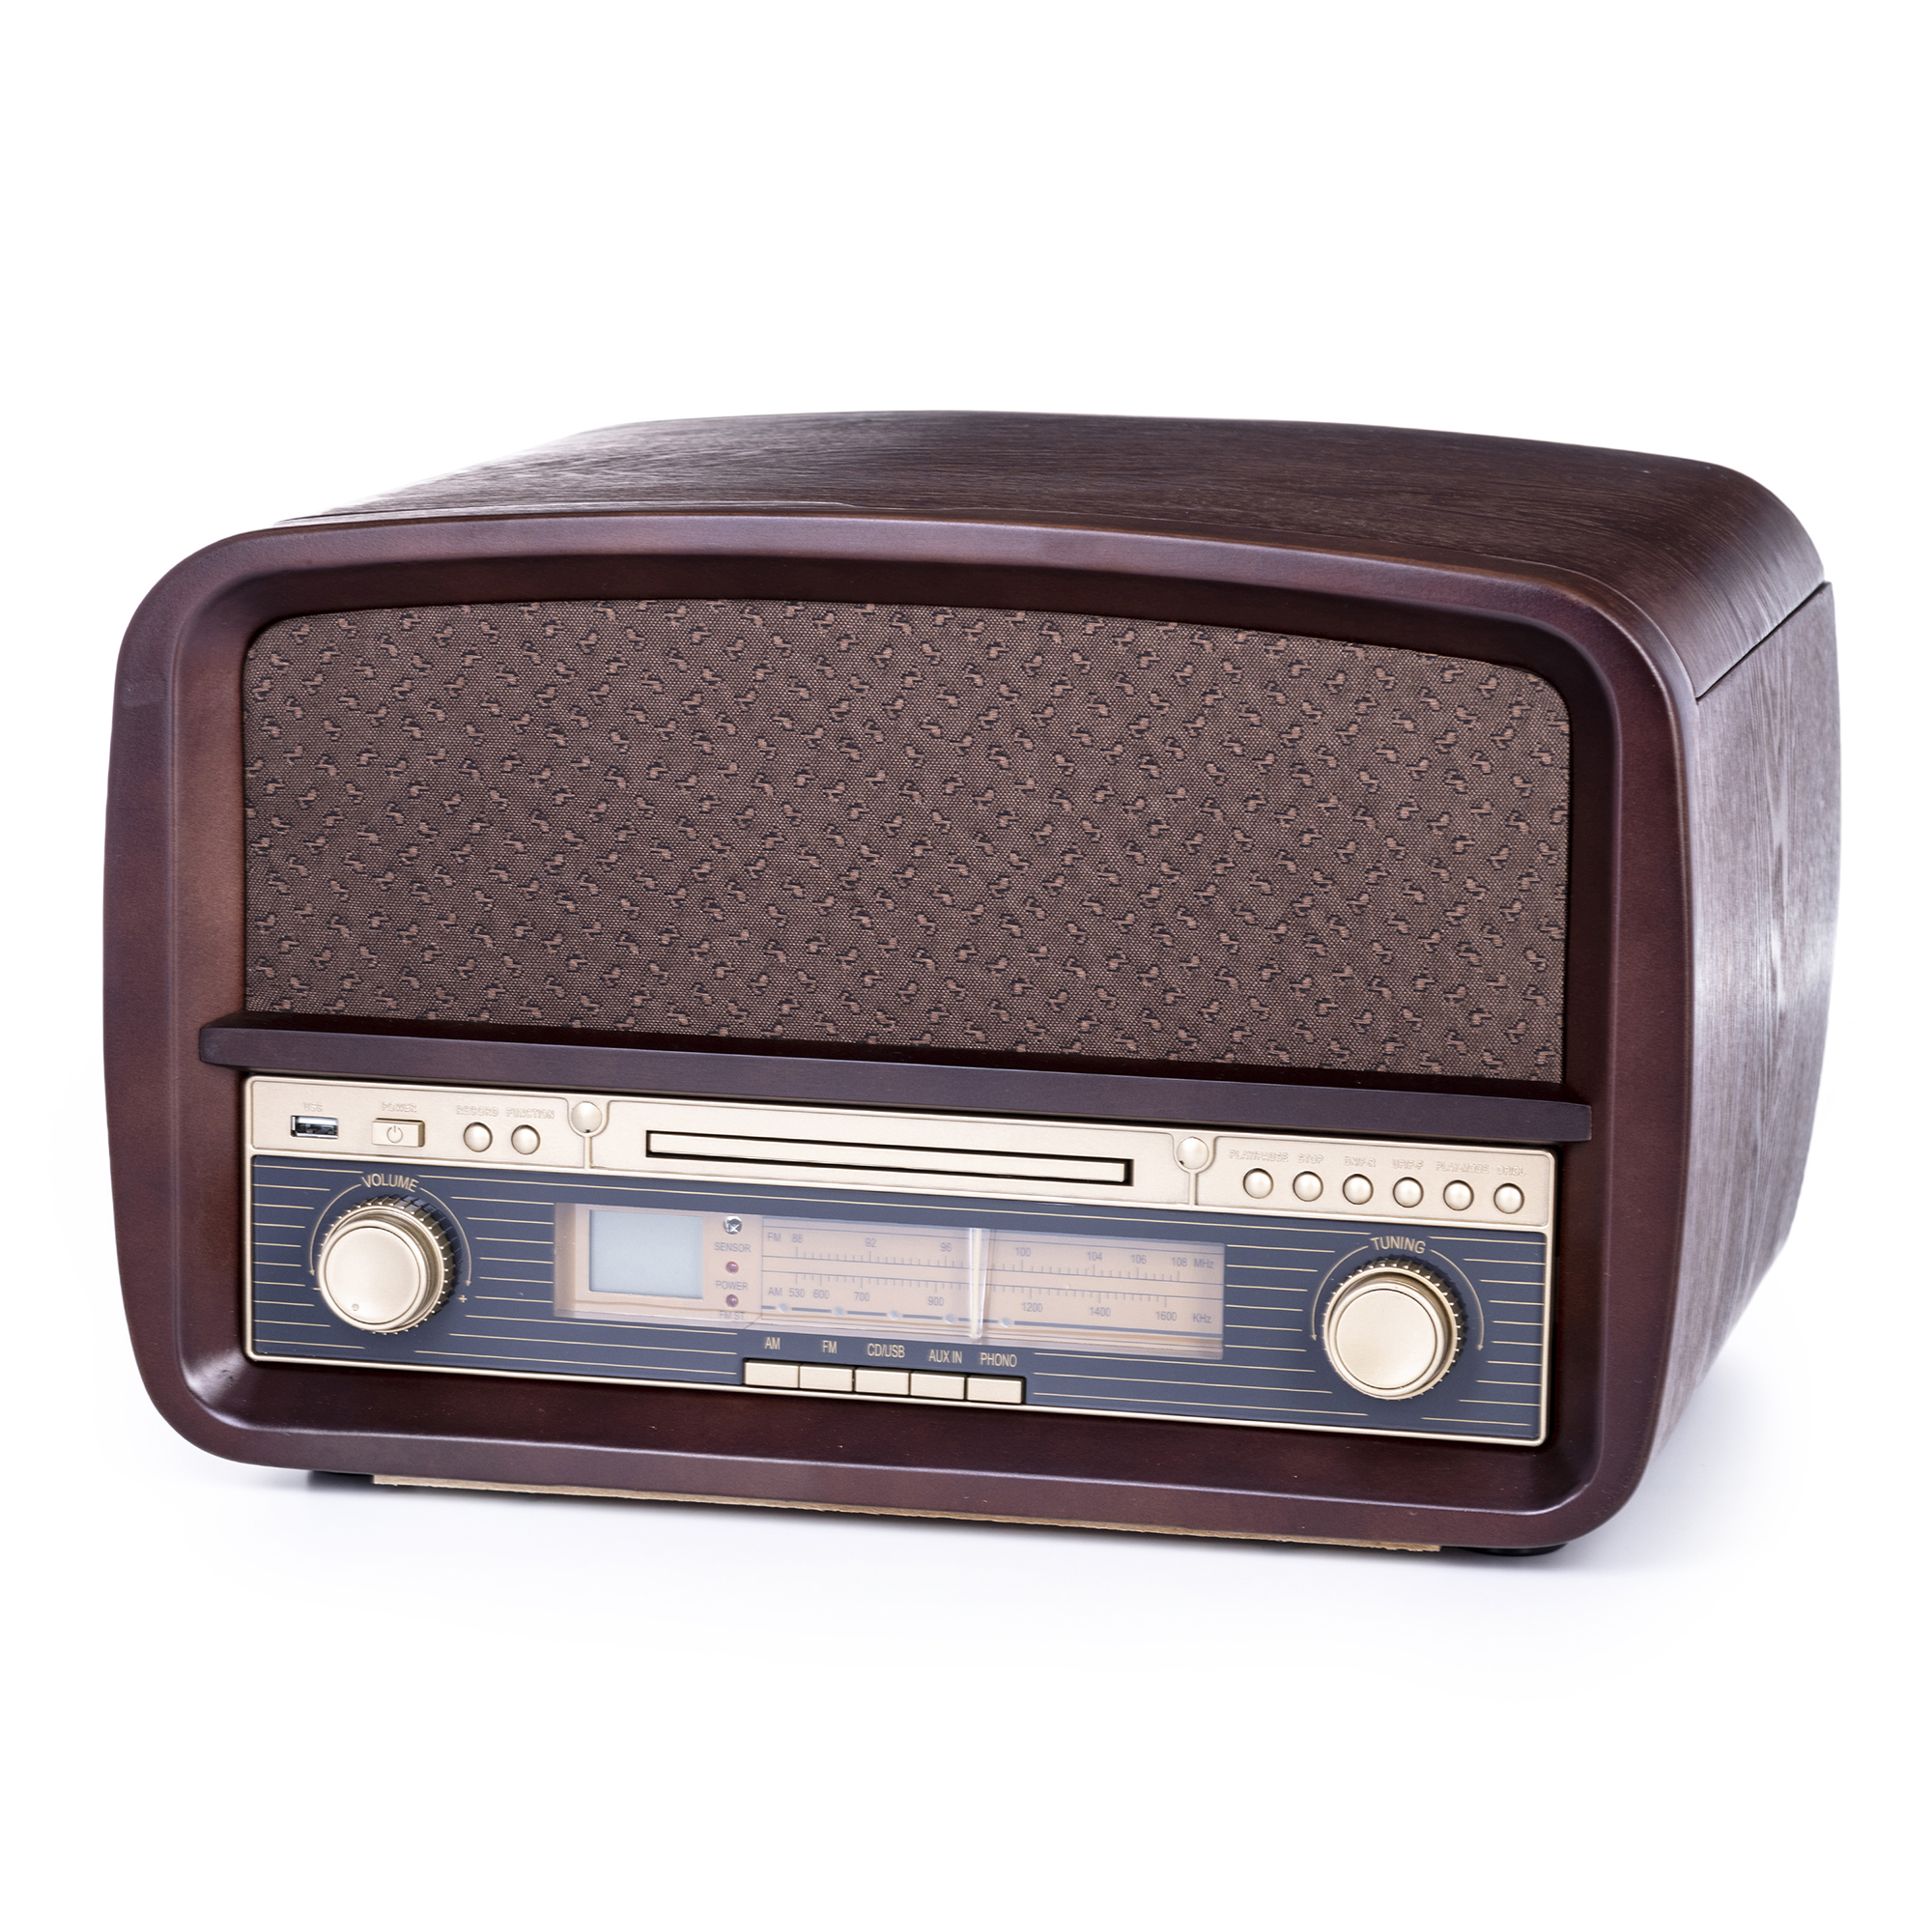 CAMRY CR1112 Tocadiscos Retro de Madera 33-45-78 RPM, USB, CD, MP3, Mando a Distancia, Radio FM, Grabador, Estilo Vintage